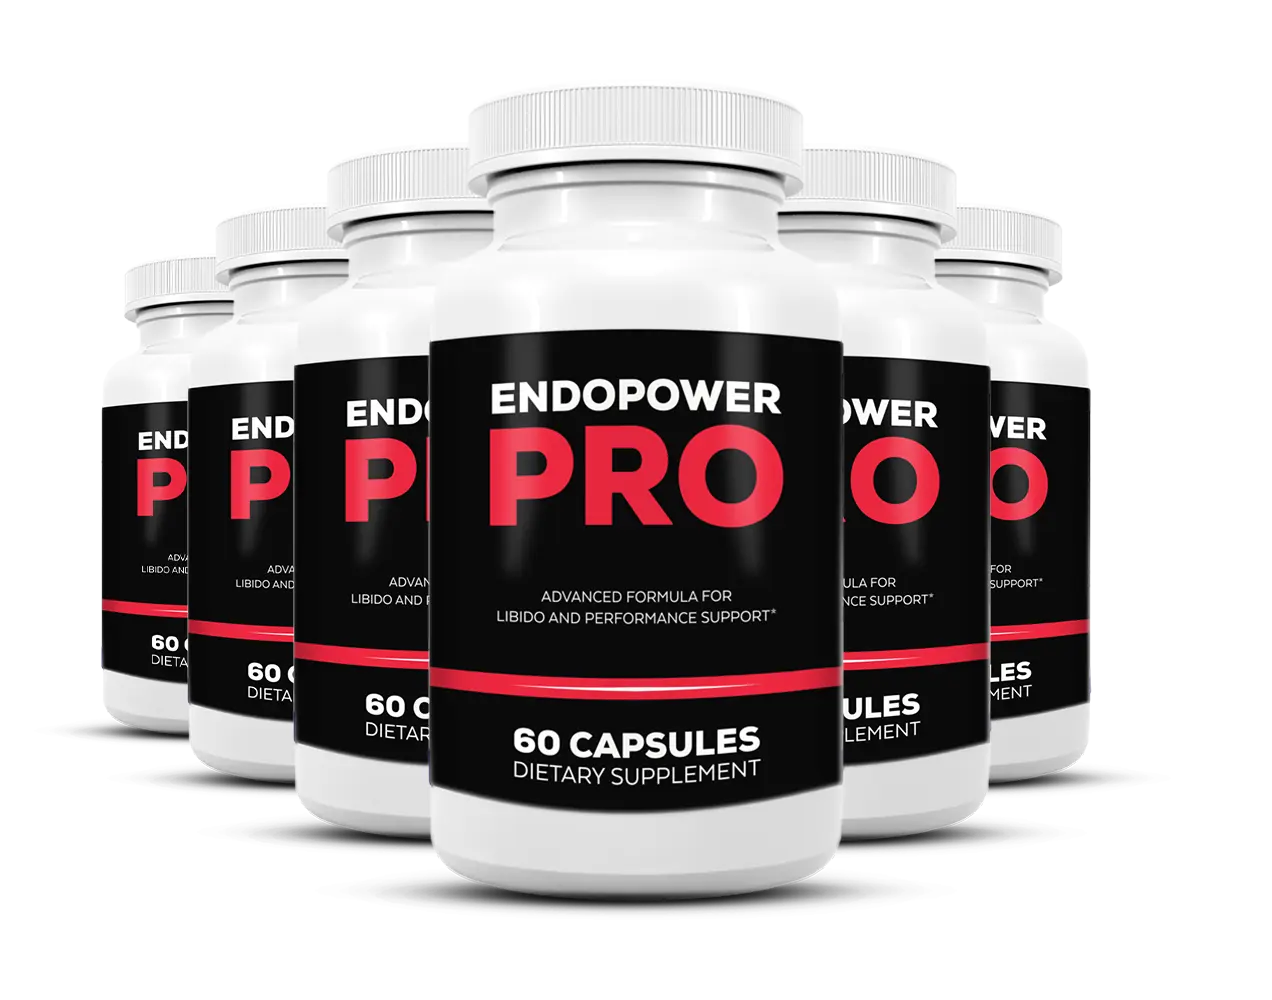 Endo Power Pro six bottles